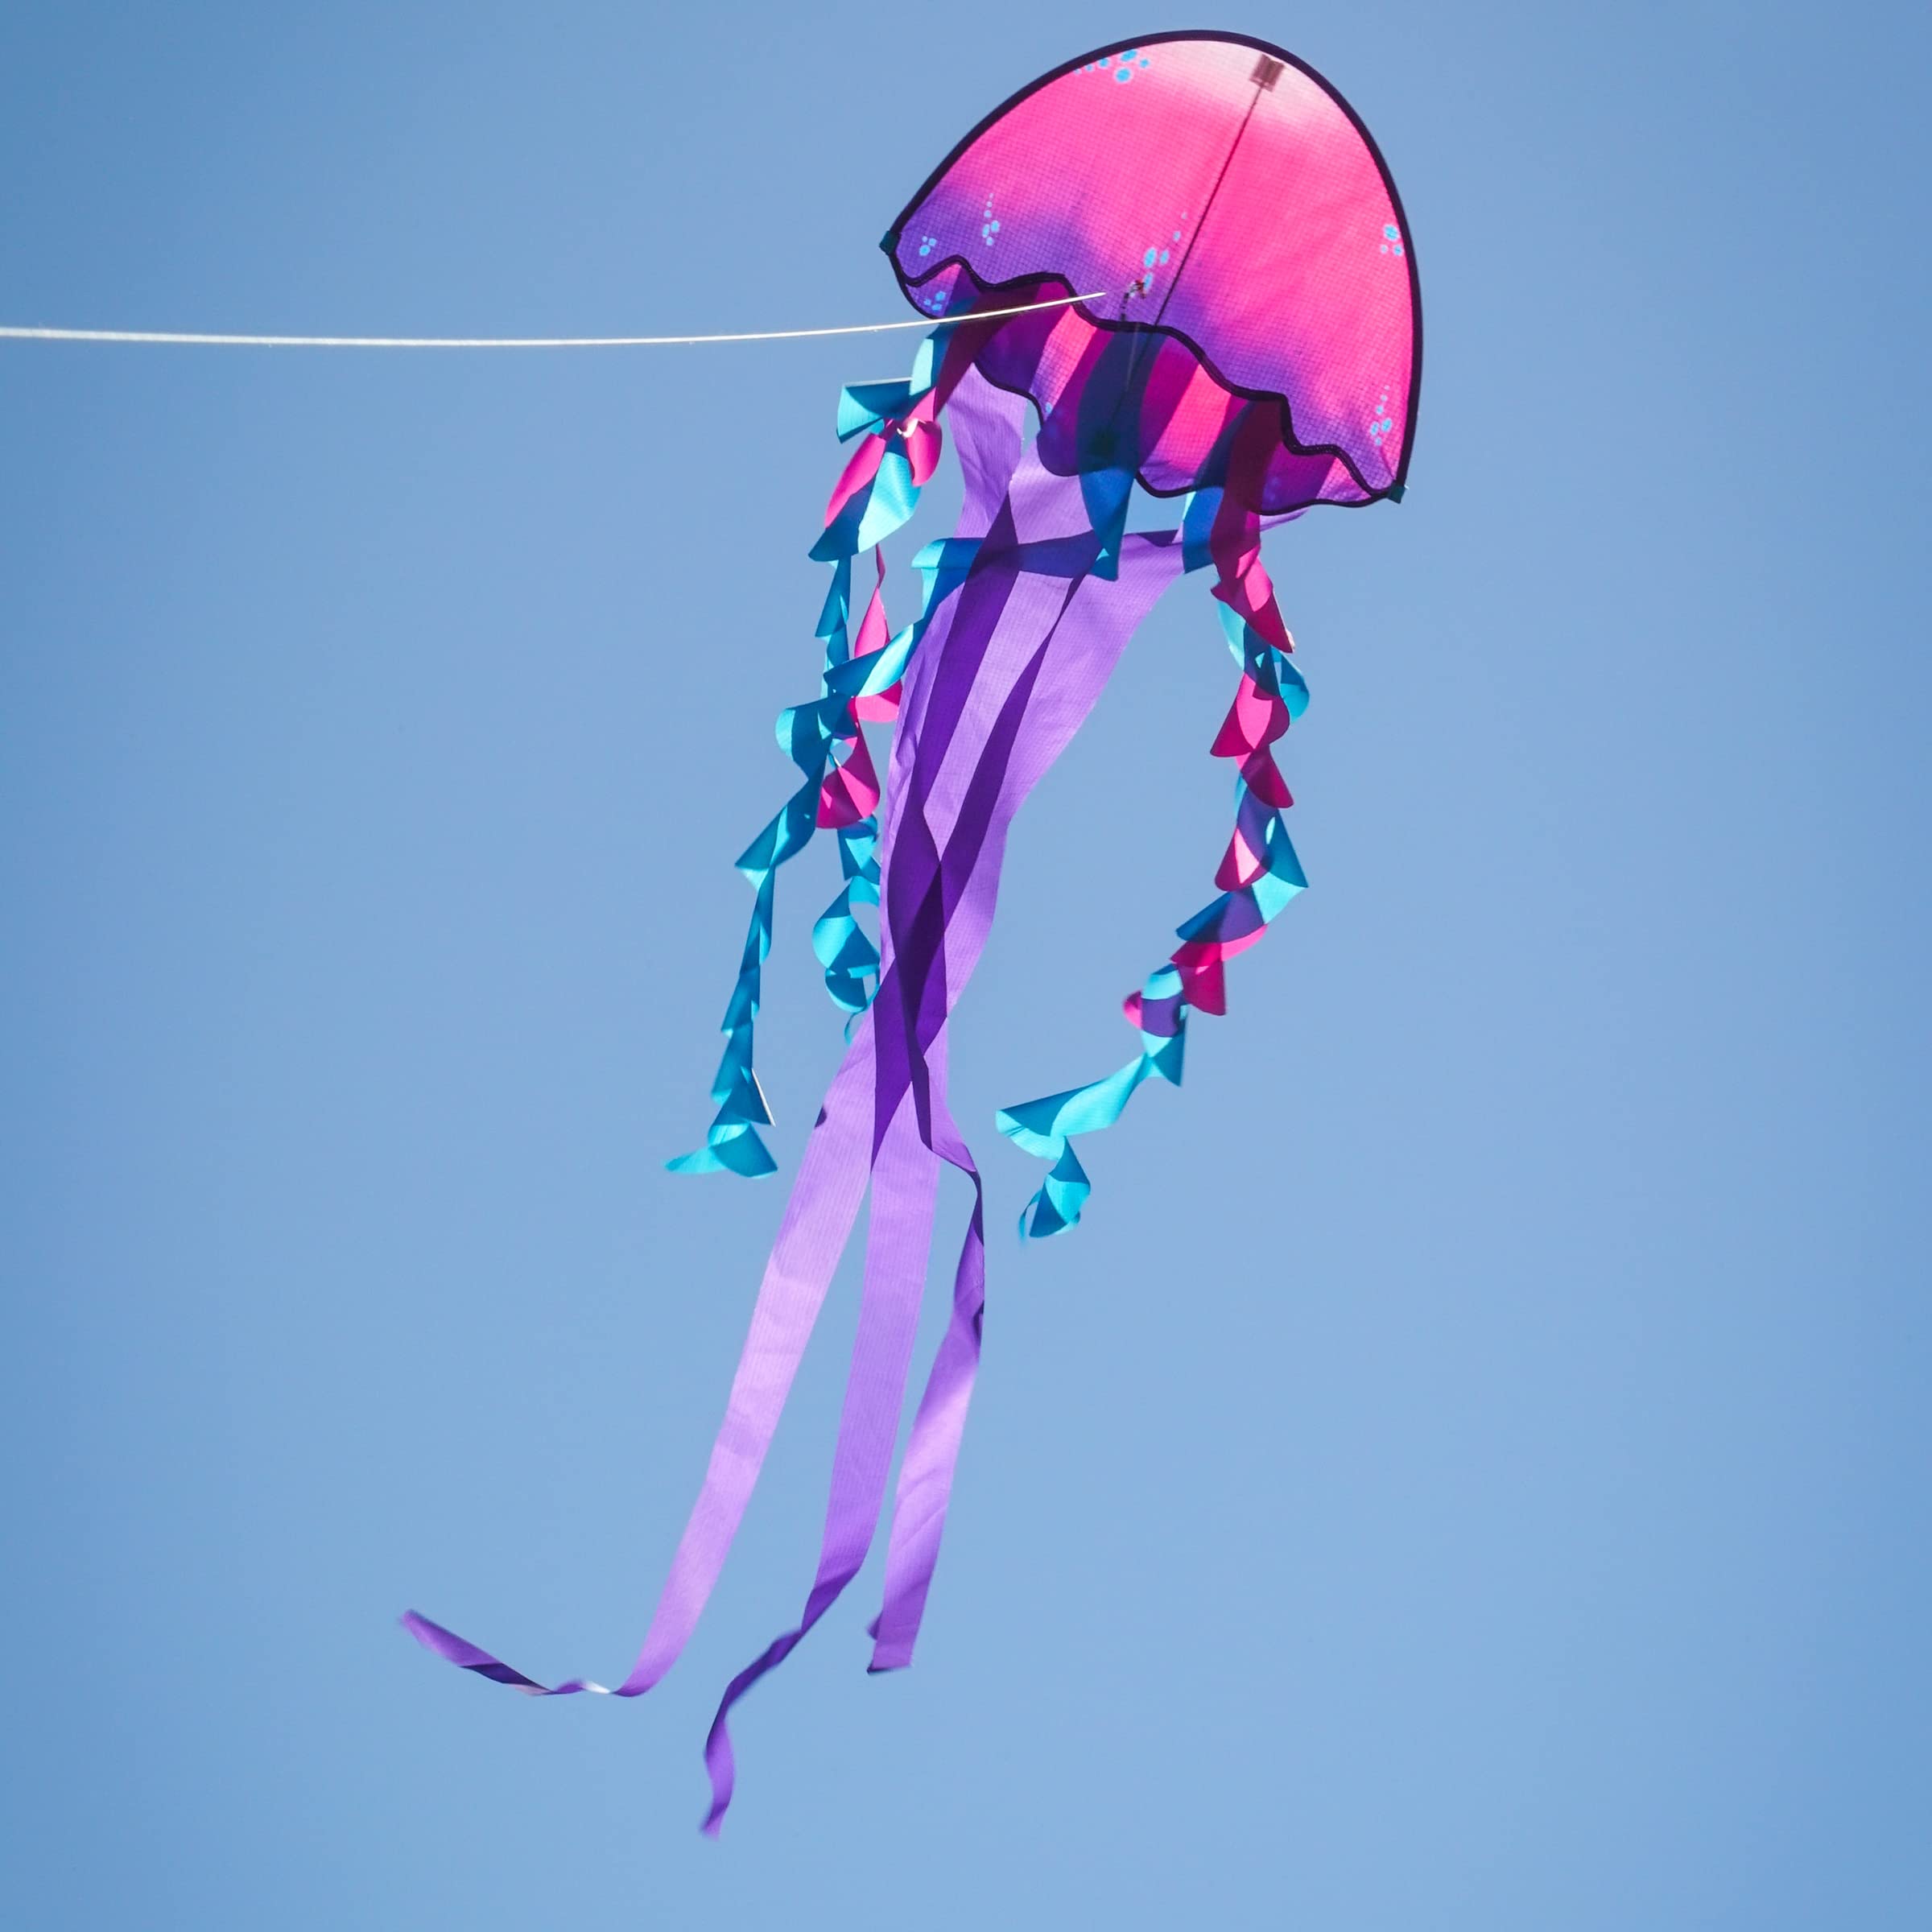 Jellyfish Dancing Dragon Kite